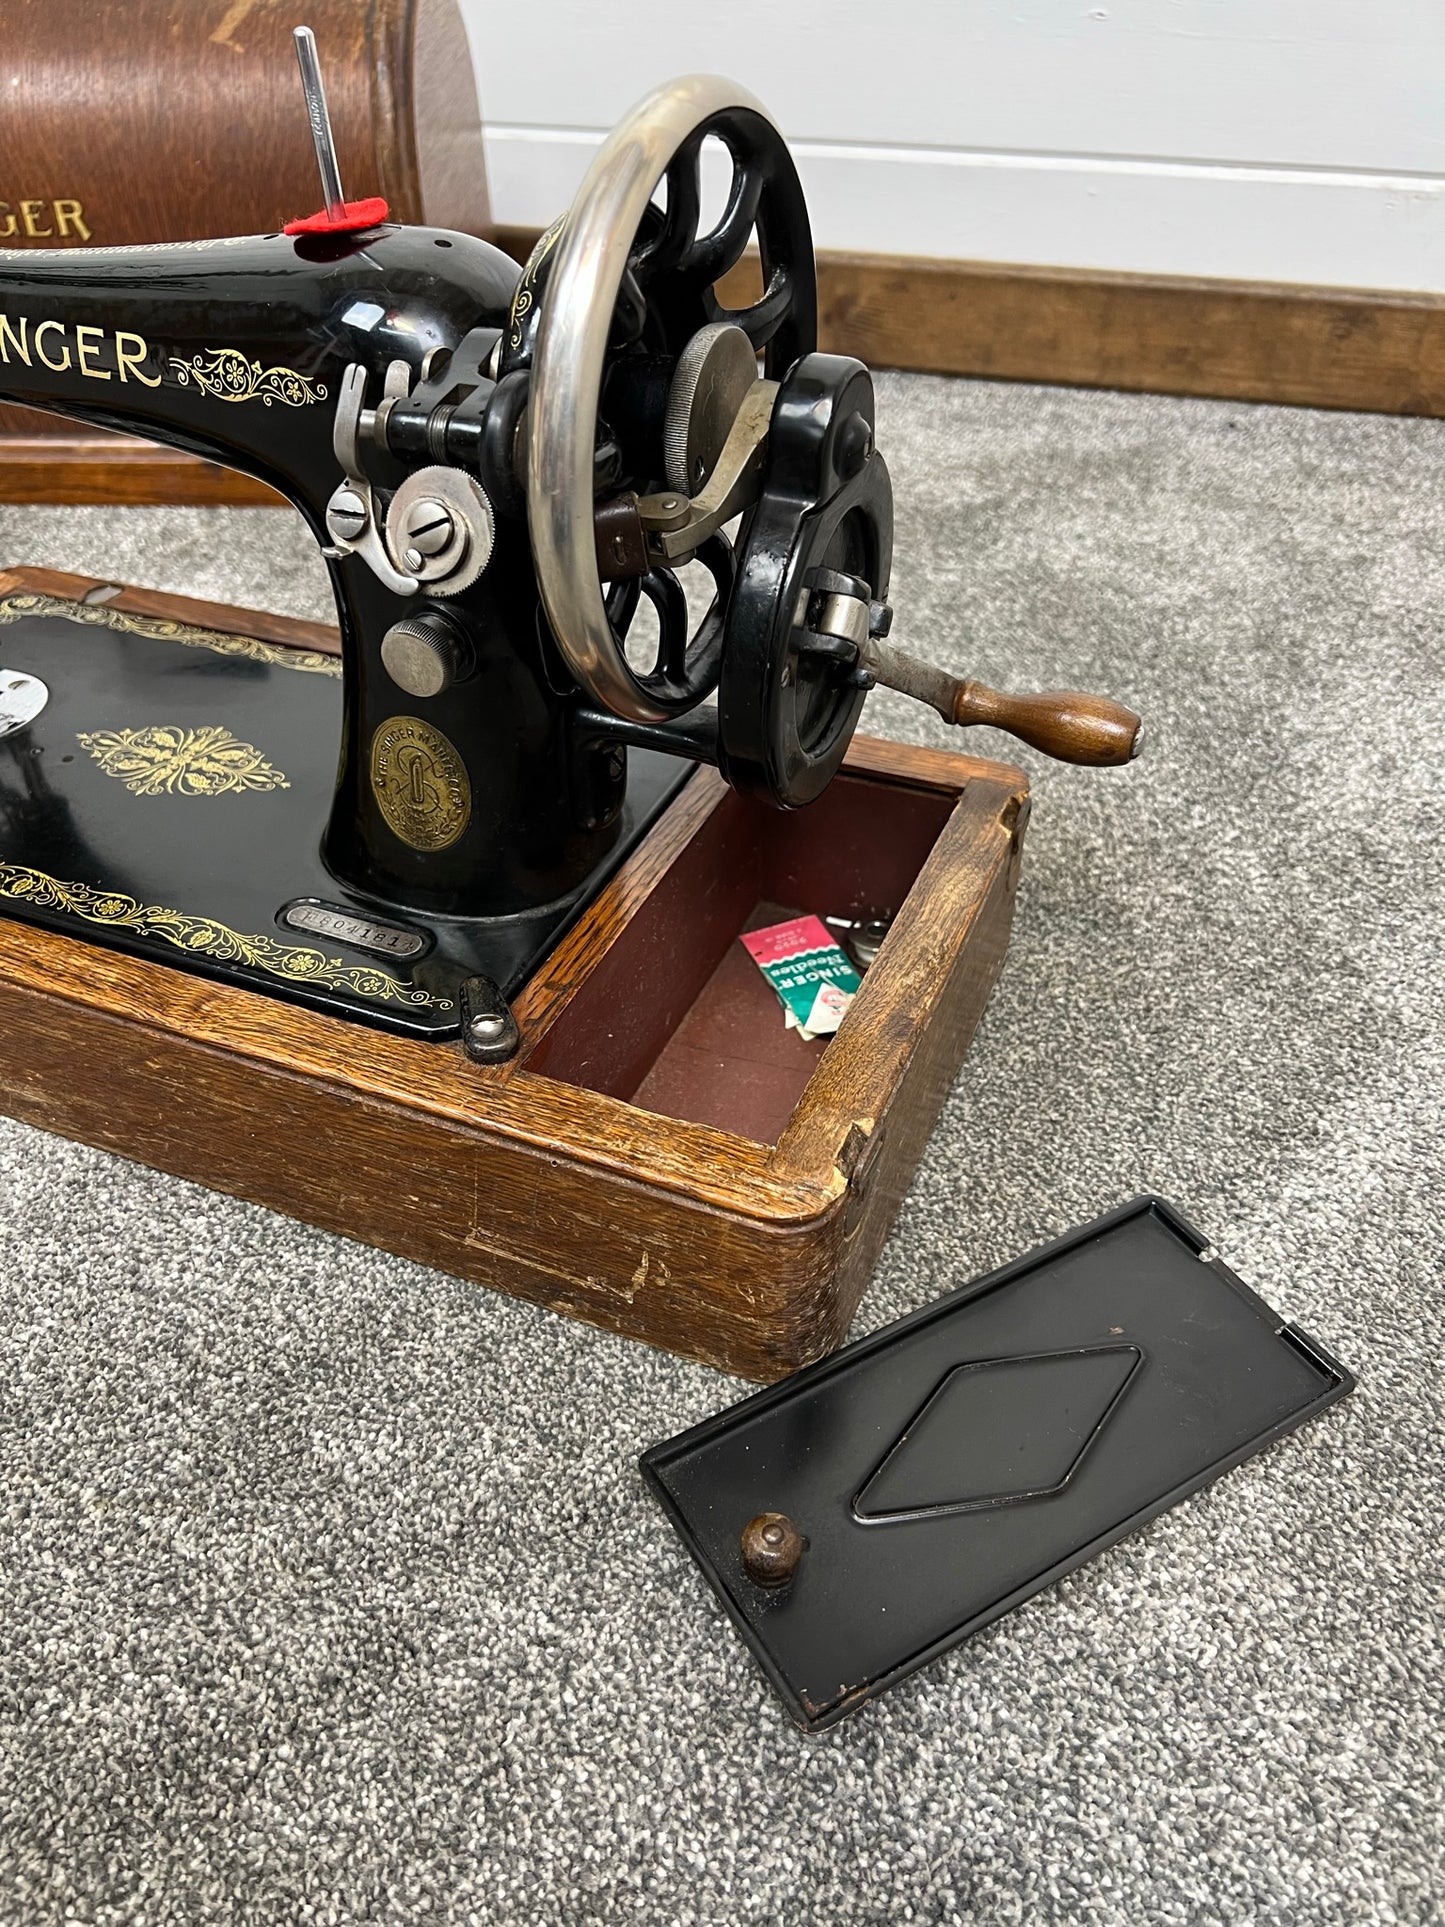 Vintage Singer Sewing Machine 15K Dates 1910 Hand Crank With Wooden Case